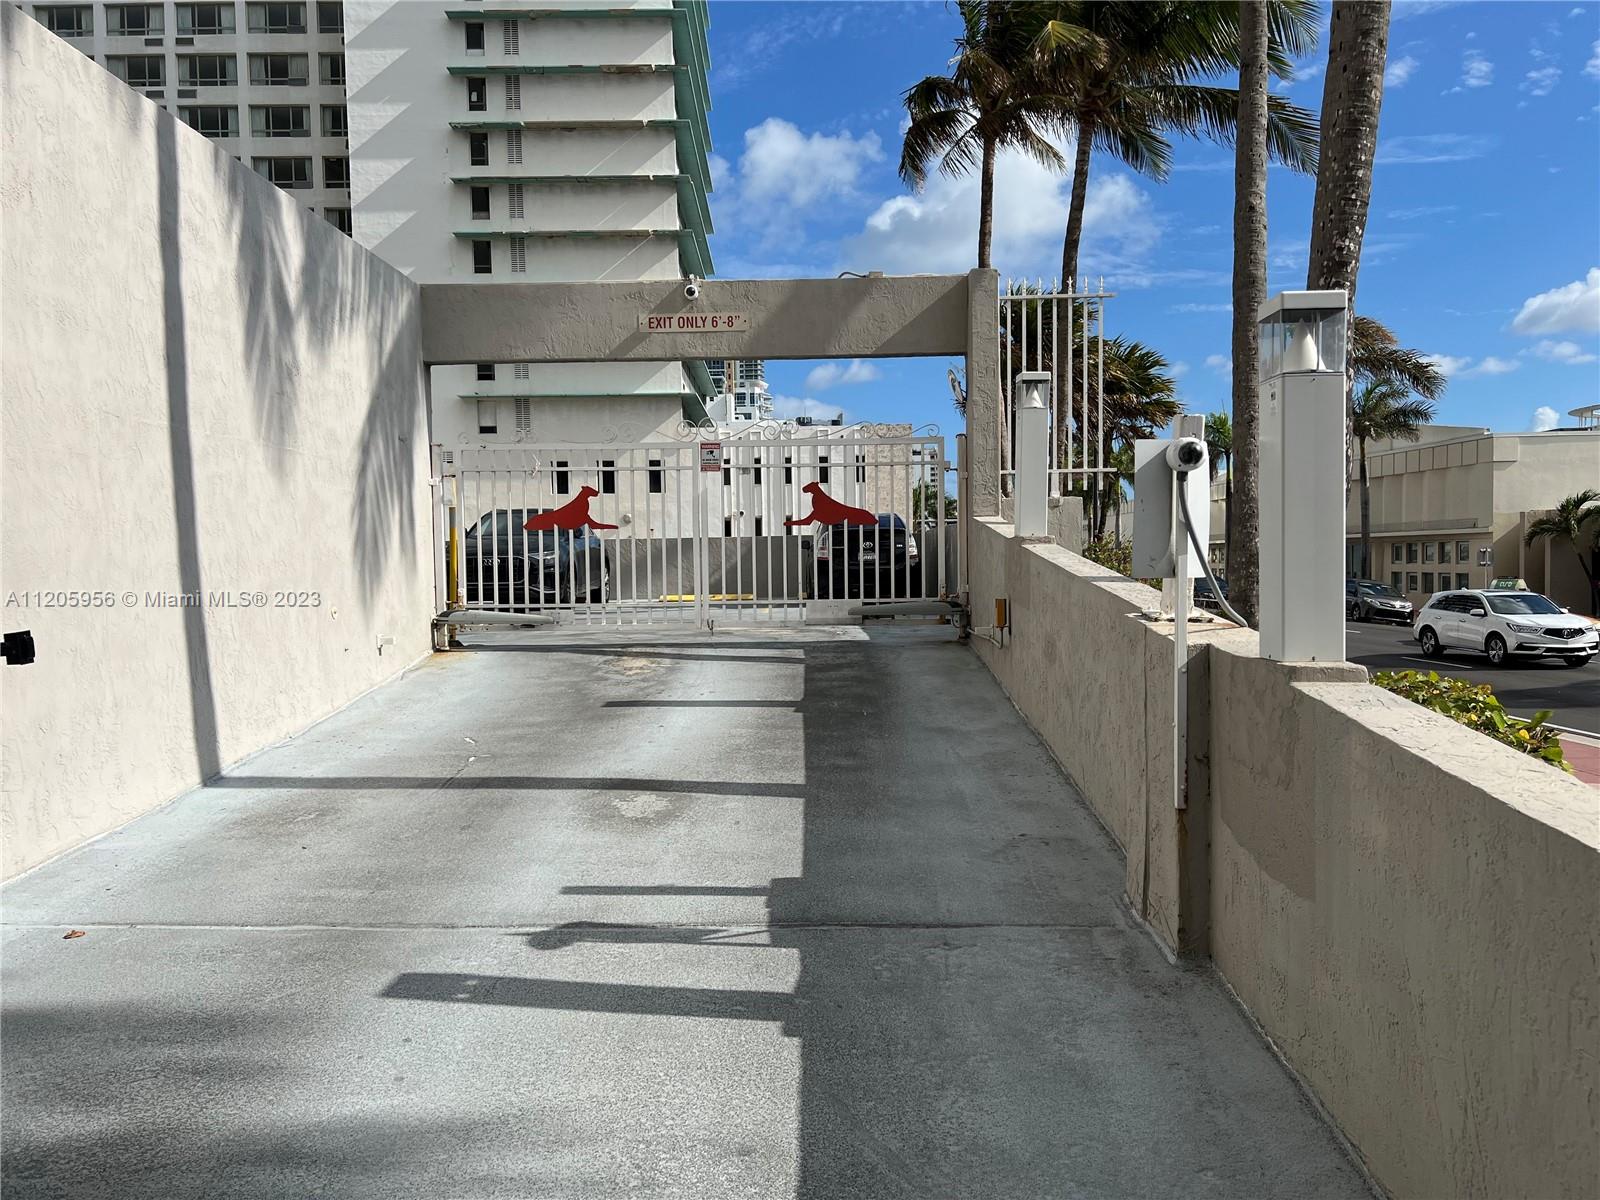 6767 Collins Ave unit 507 Miami Beach-side entrance